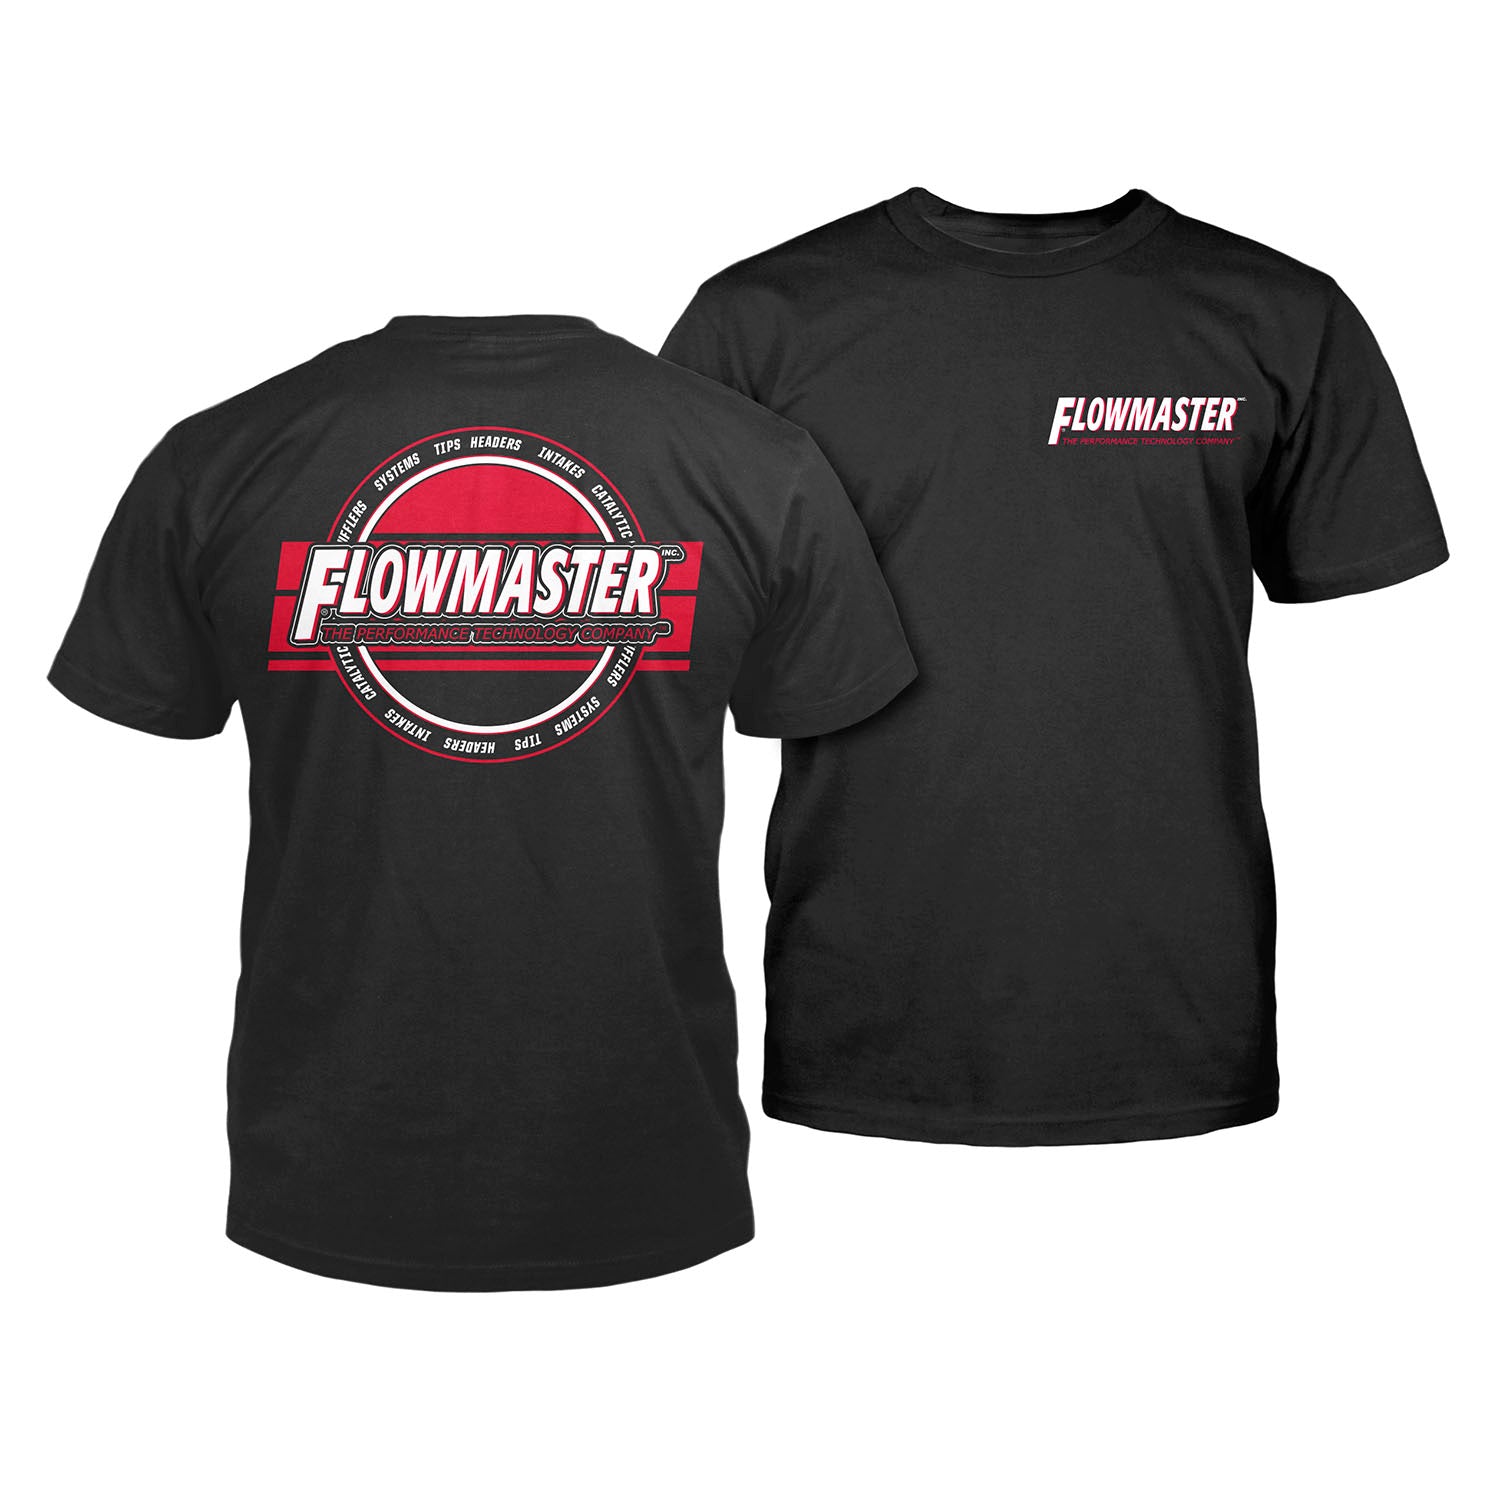 Flowmaster T-Shirt 610351